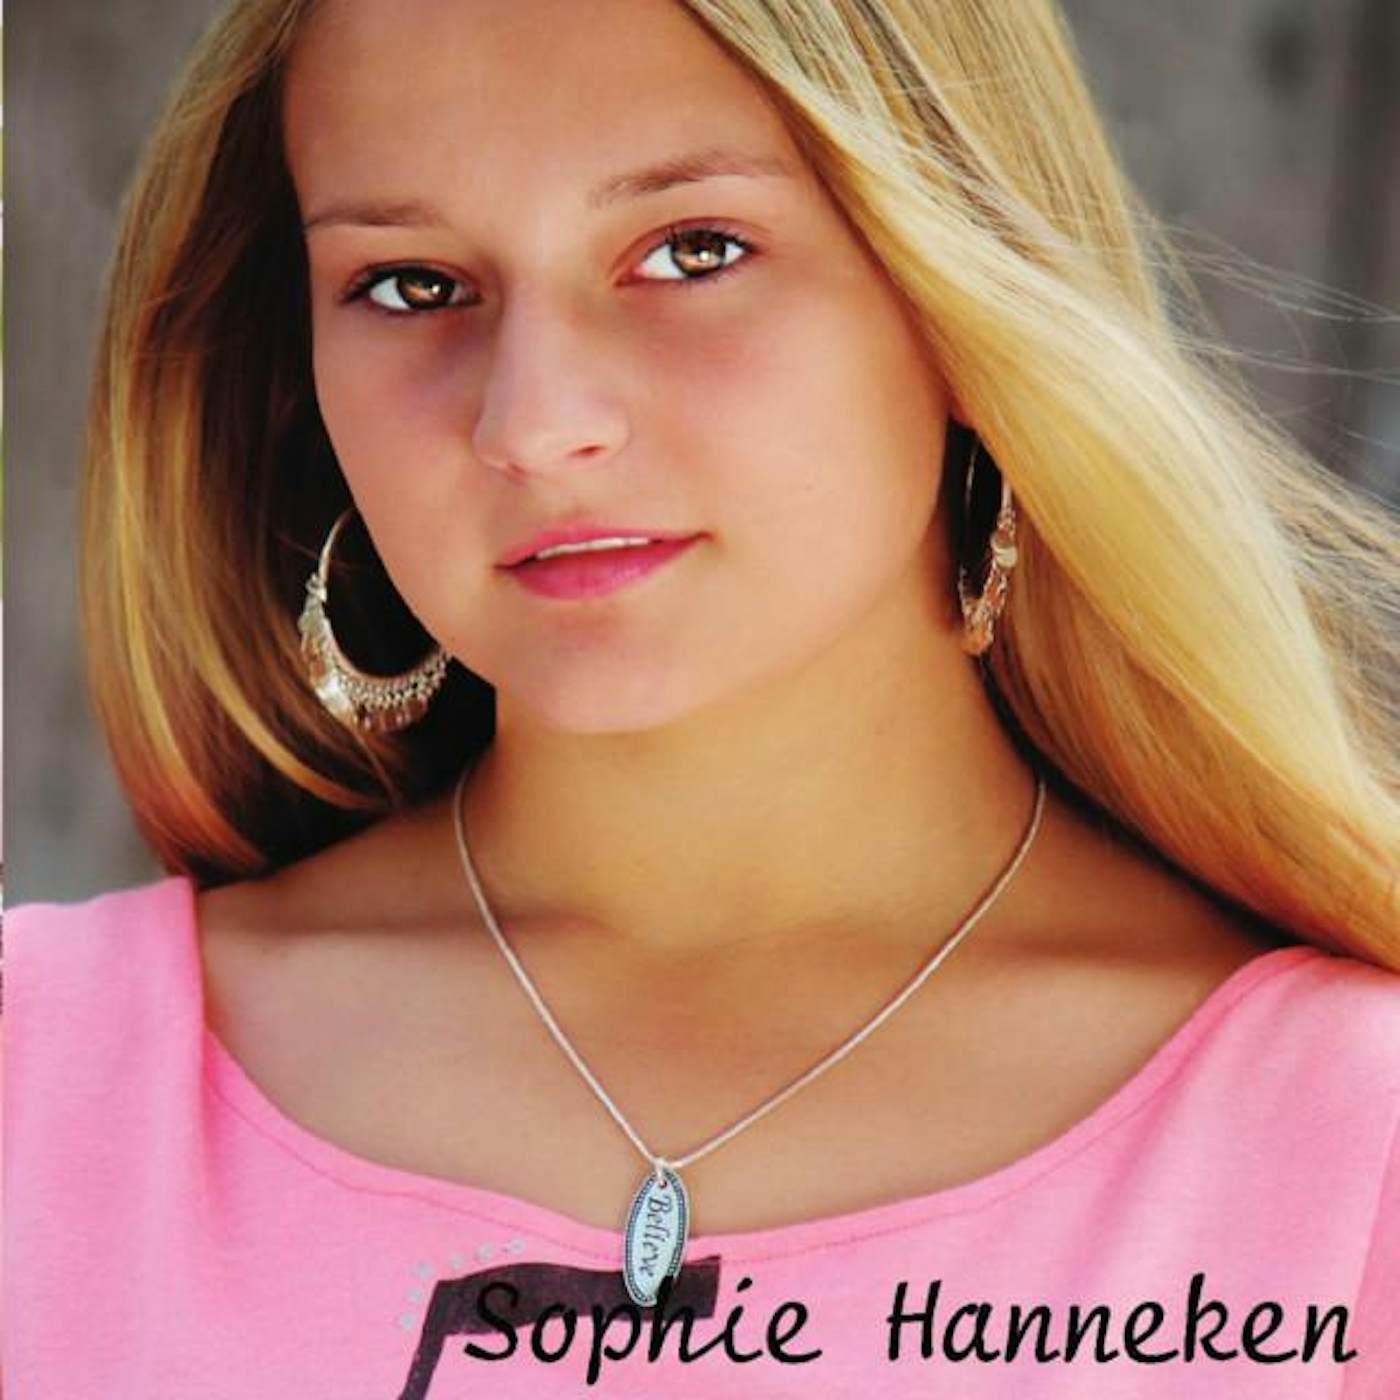 Sophie Hanneken